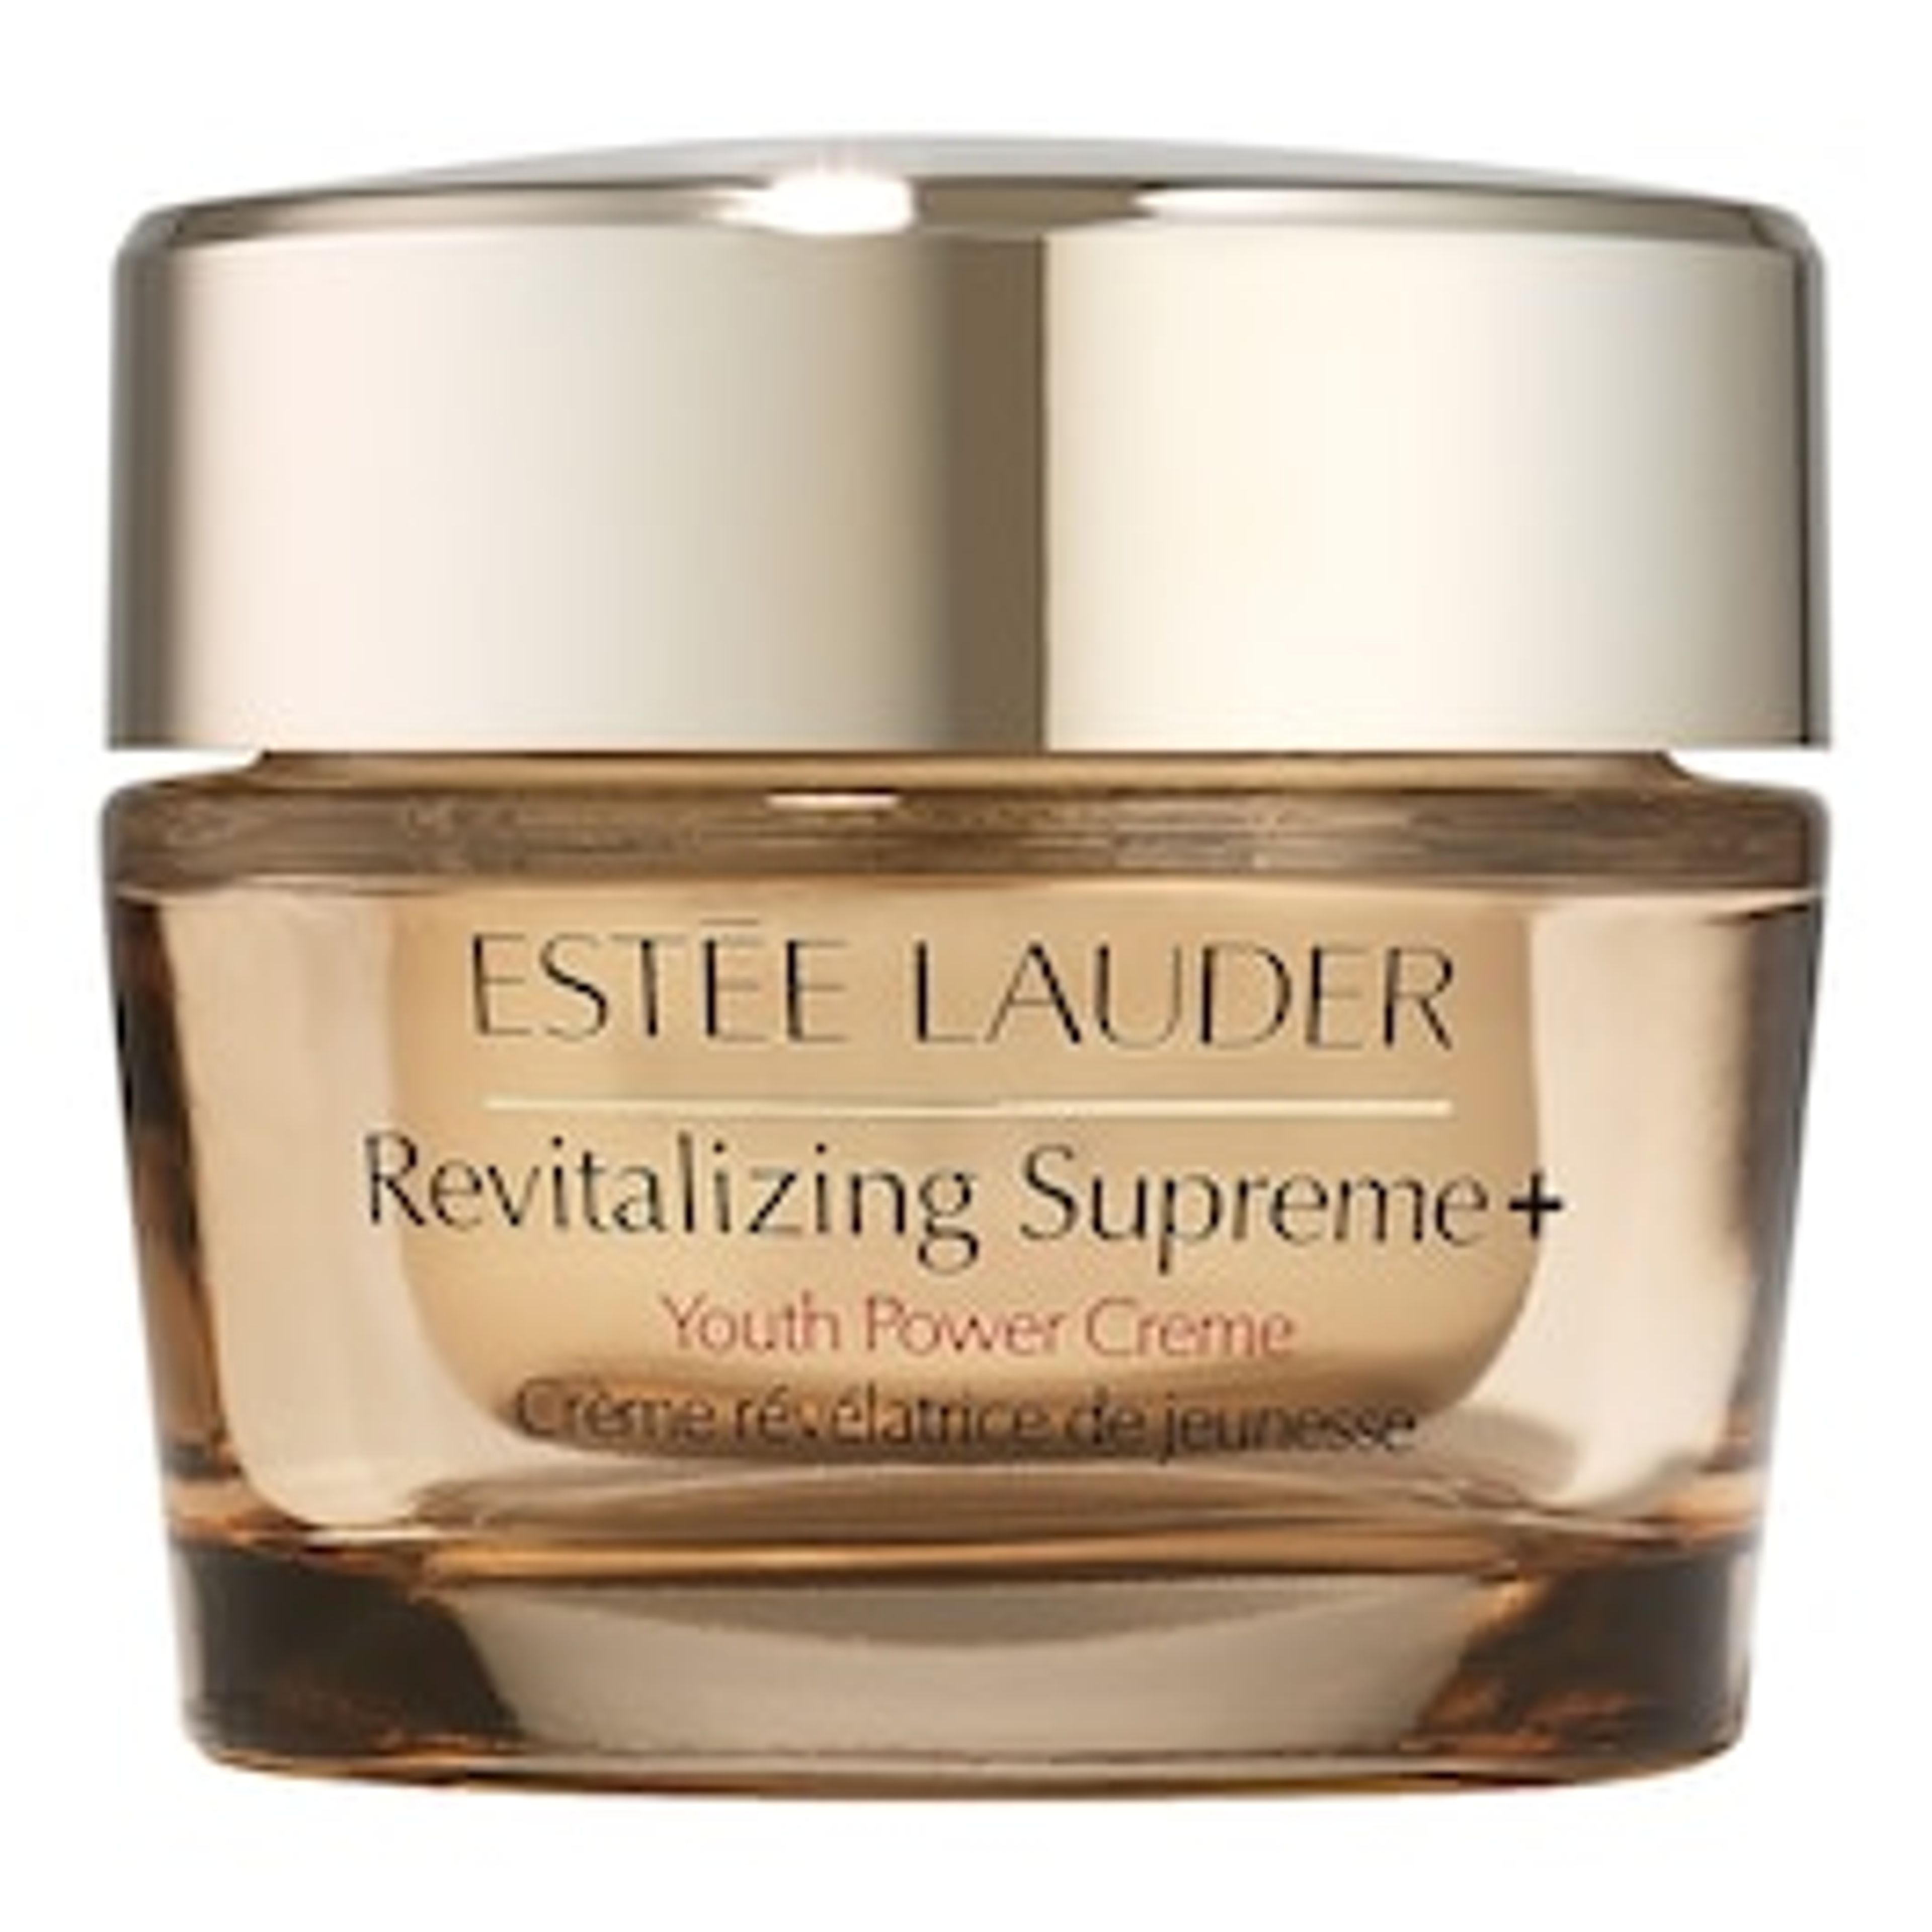 Estee Lauder Revitalizing Supreme+ Youth Power Cream 1